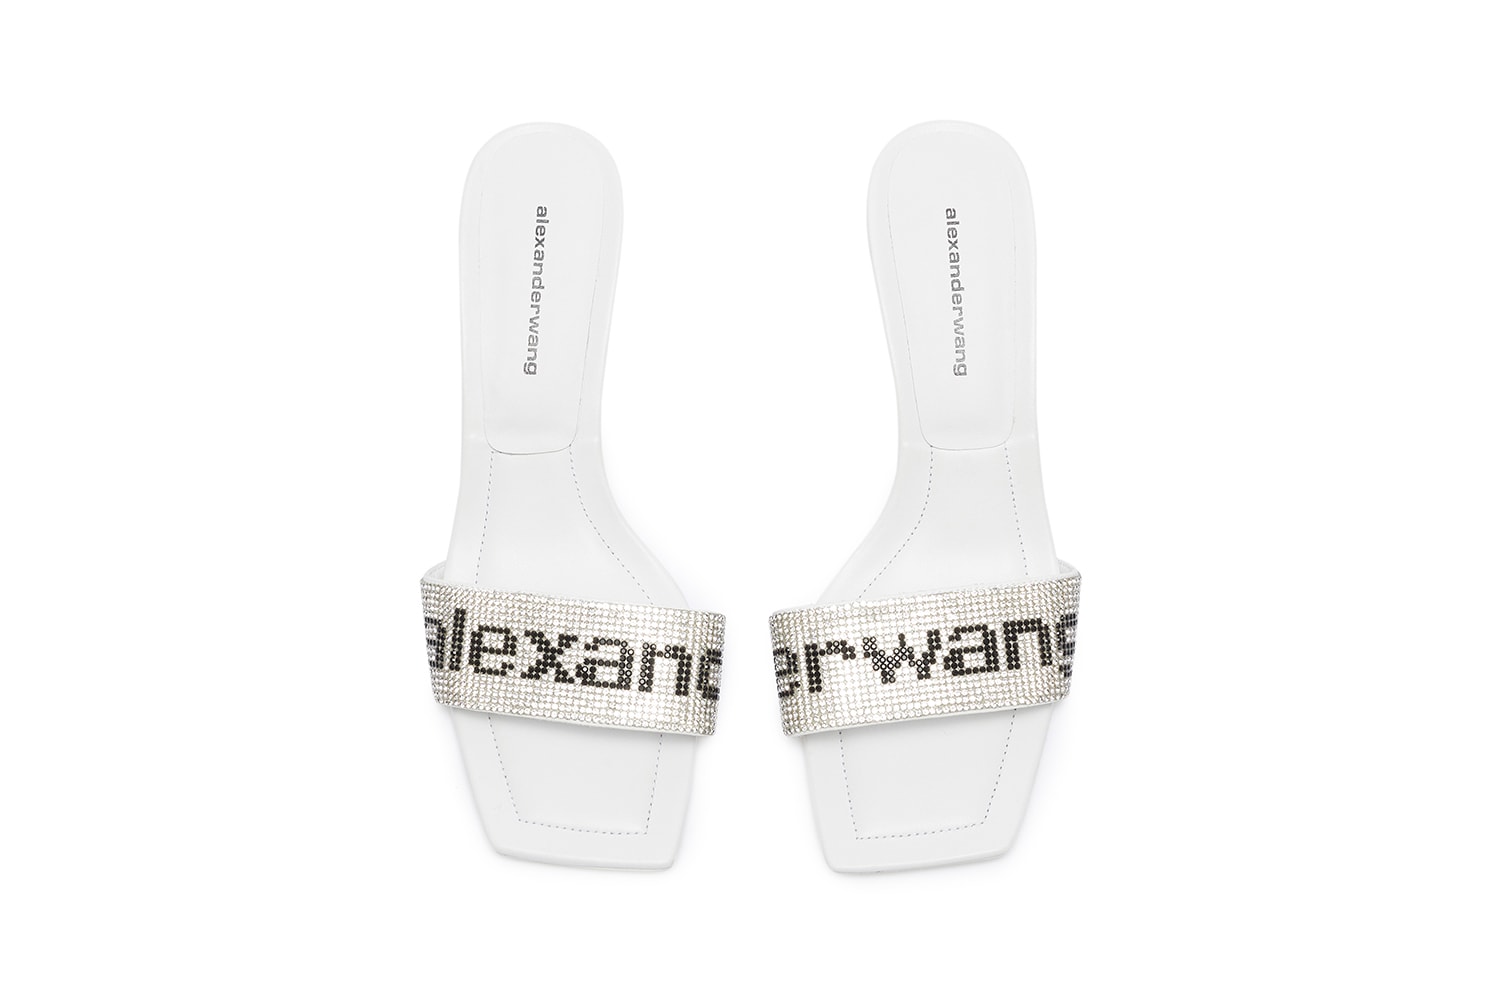 alexander wang lane crawford exclusive capsule collection mules fanny packs sweatshirts 